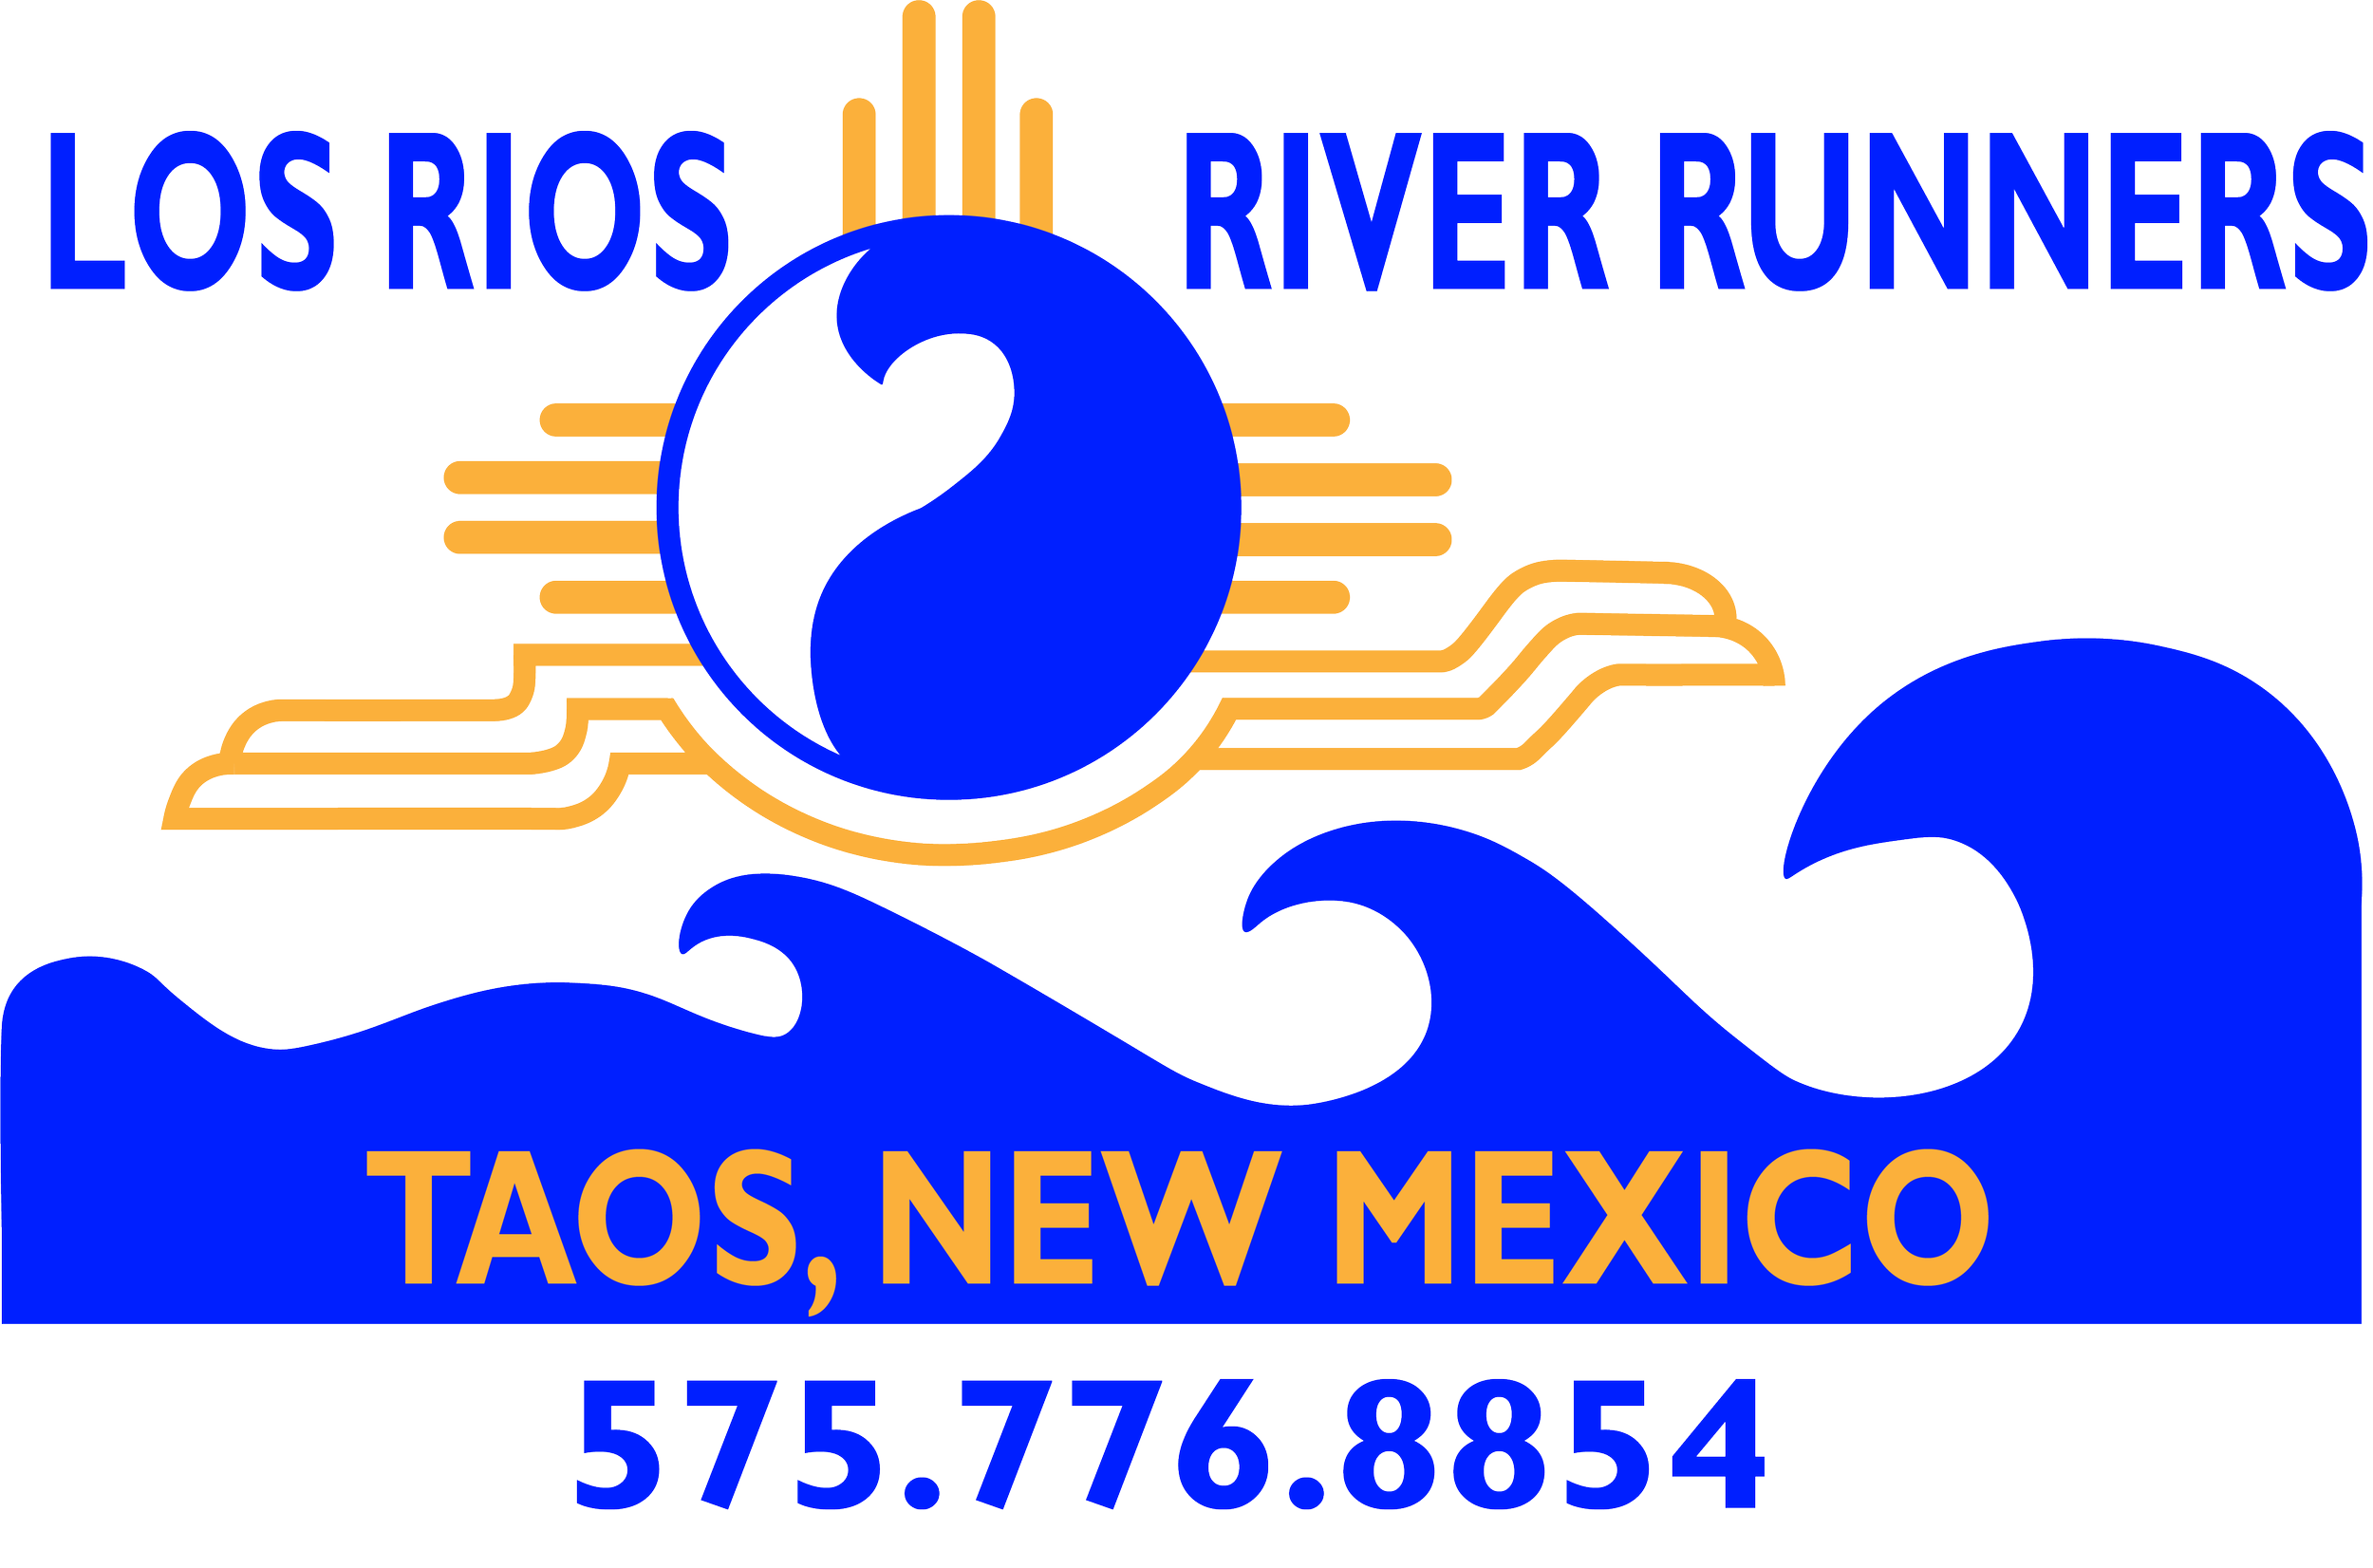 Los Rios River Runners